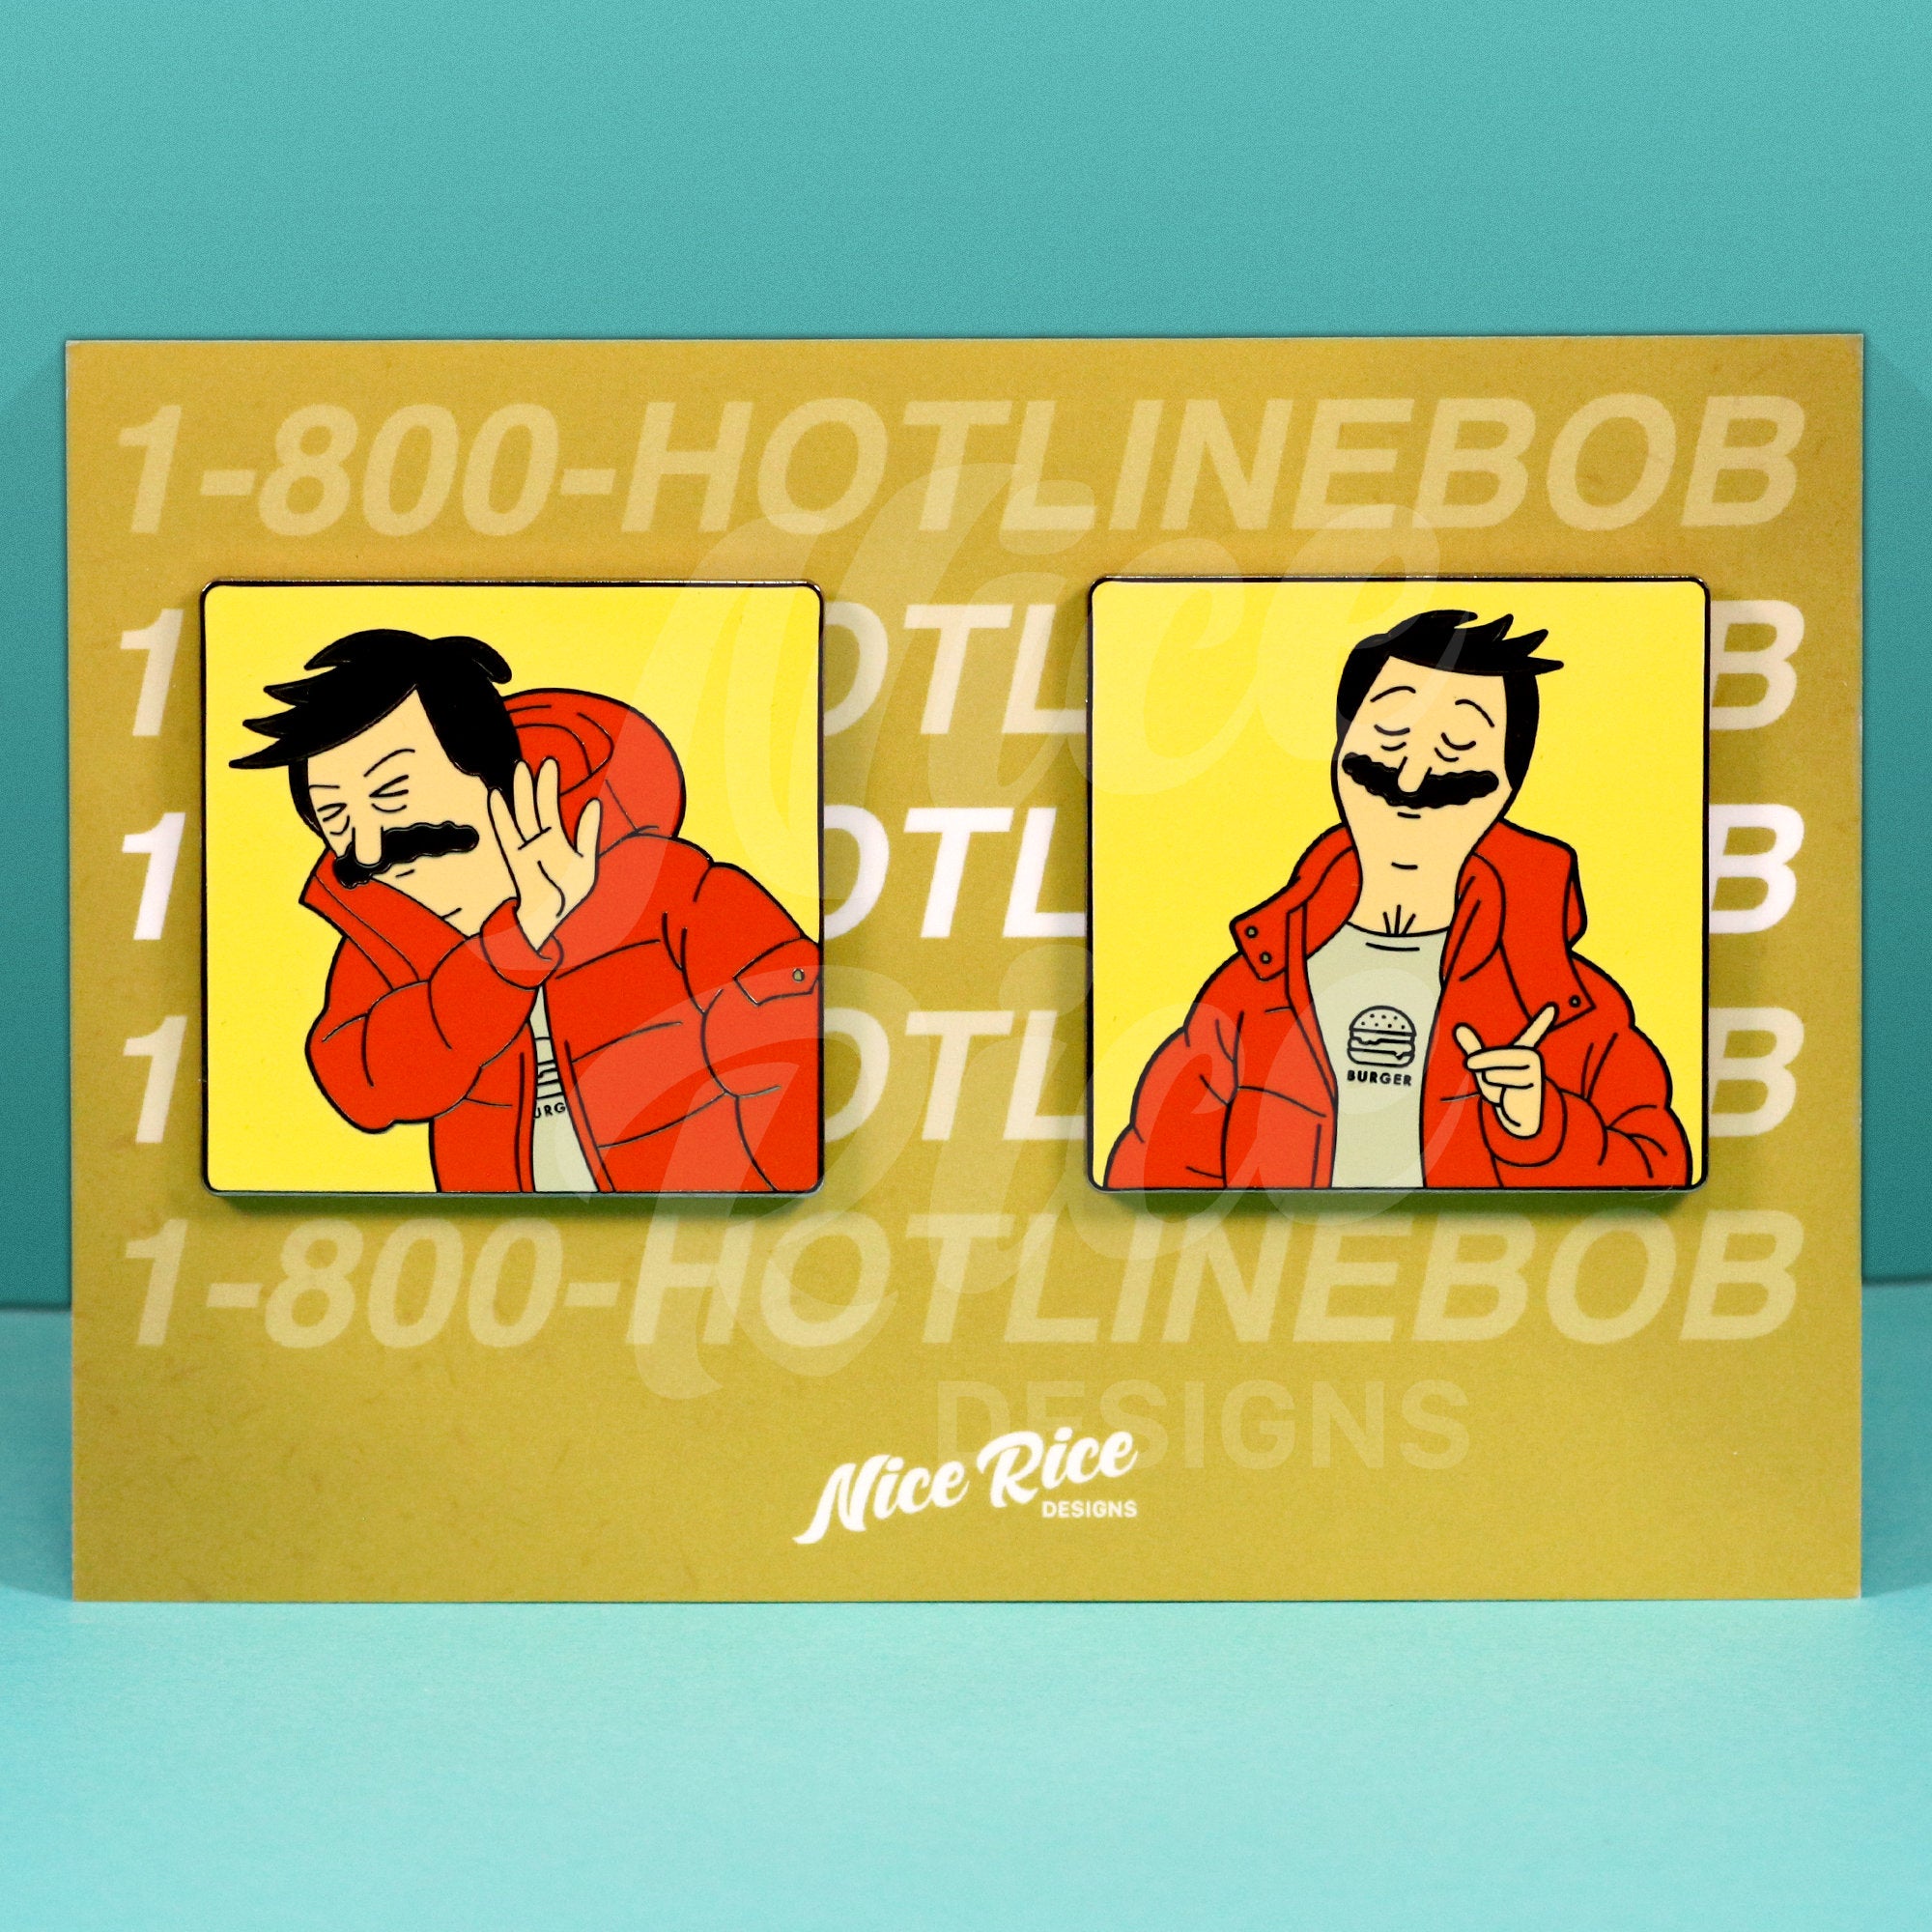 Hotline Bob Pin Set by Nice Rice Designs